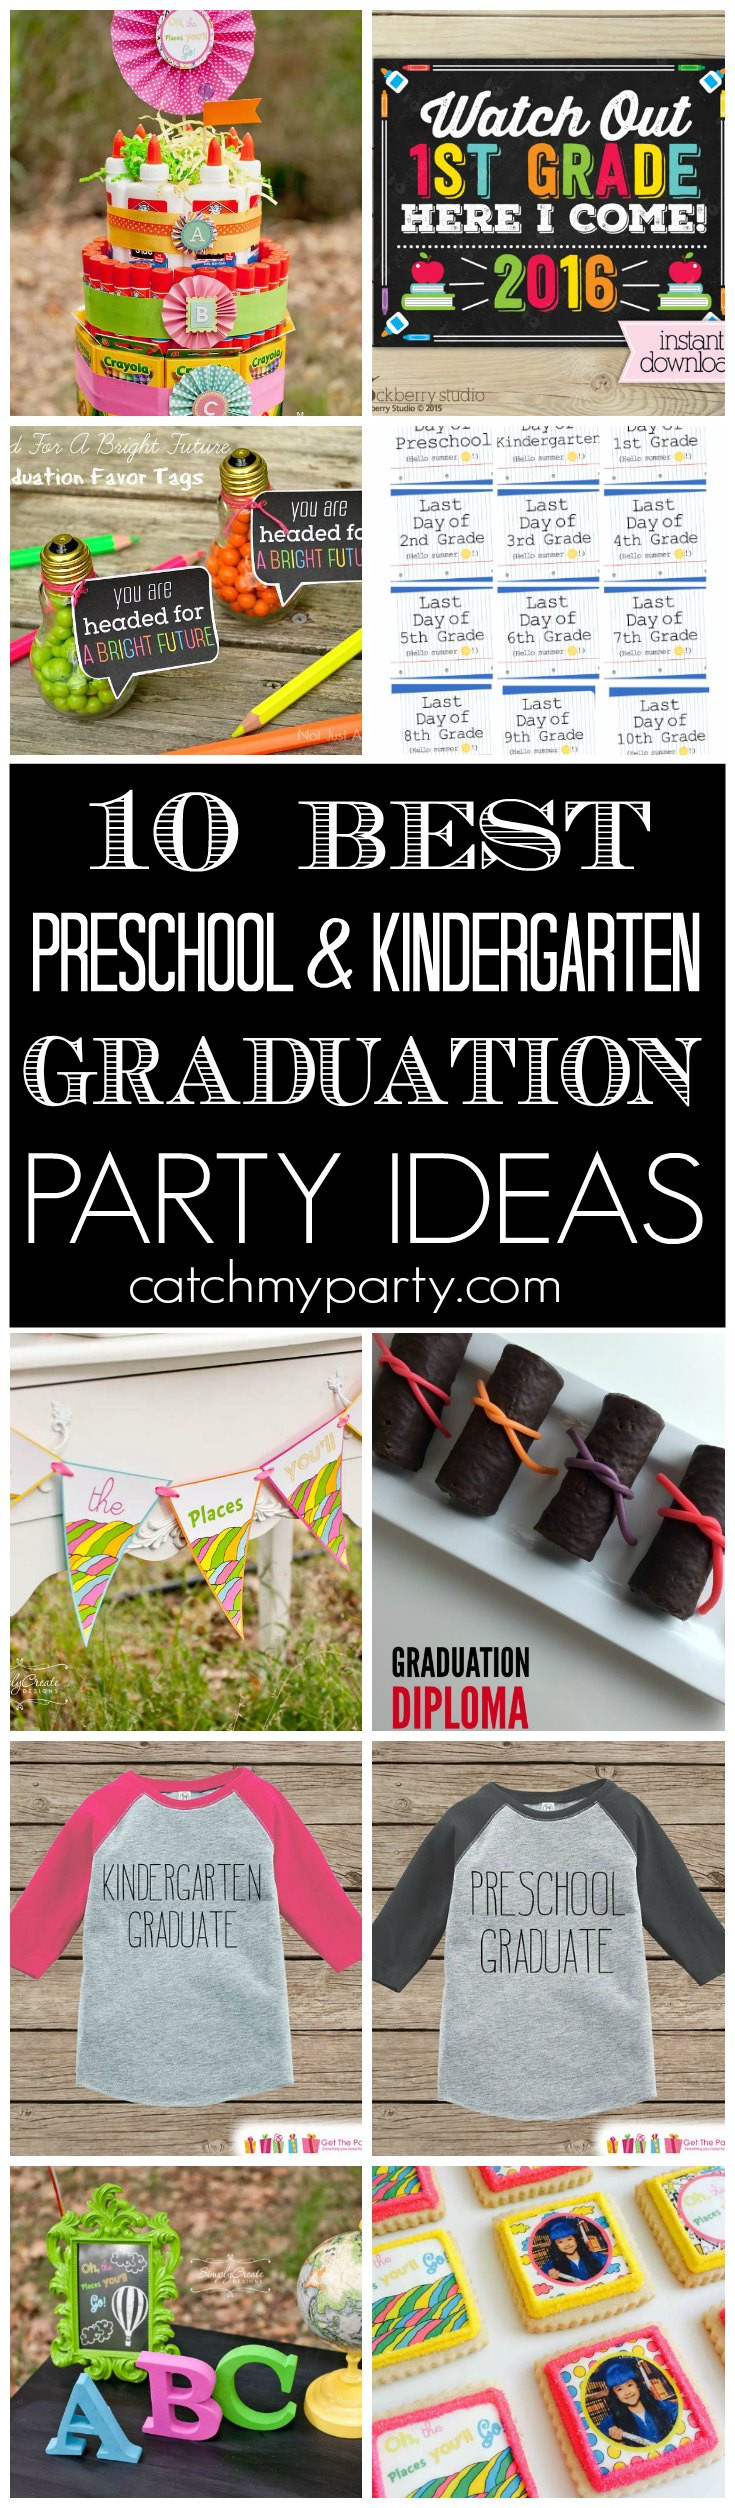 Best Graduation Party Ideas
 10 Best Preschool & Kindergarten Graduation Party Ideas